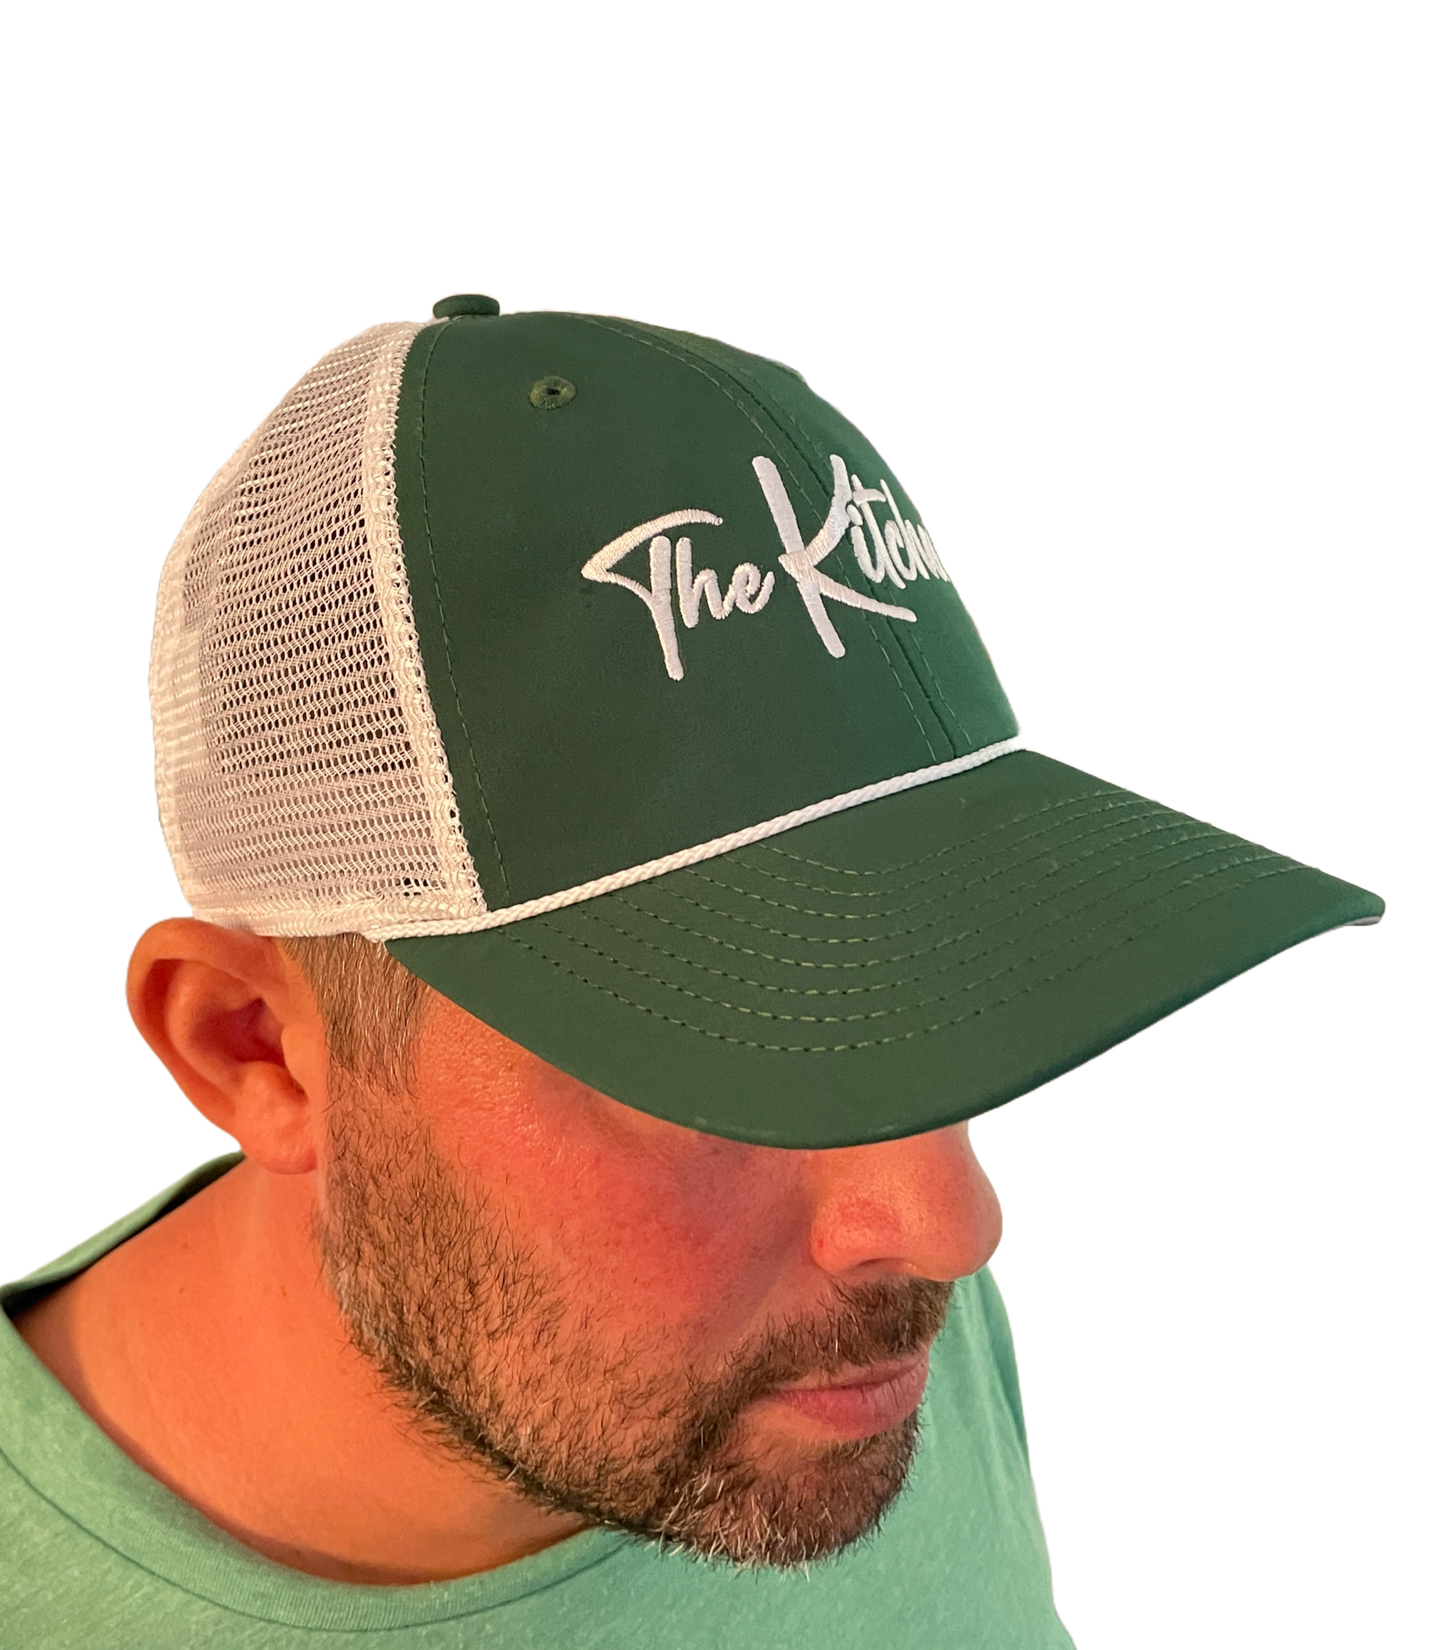 Green/White Trucker Hat